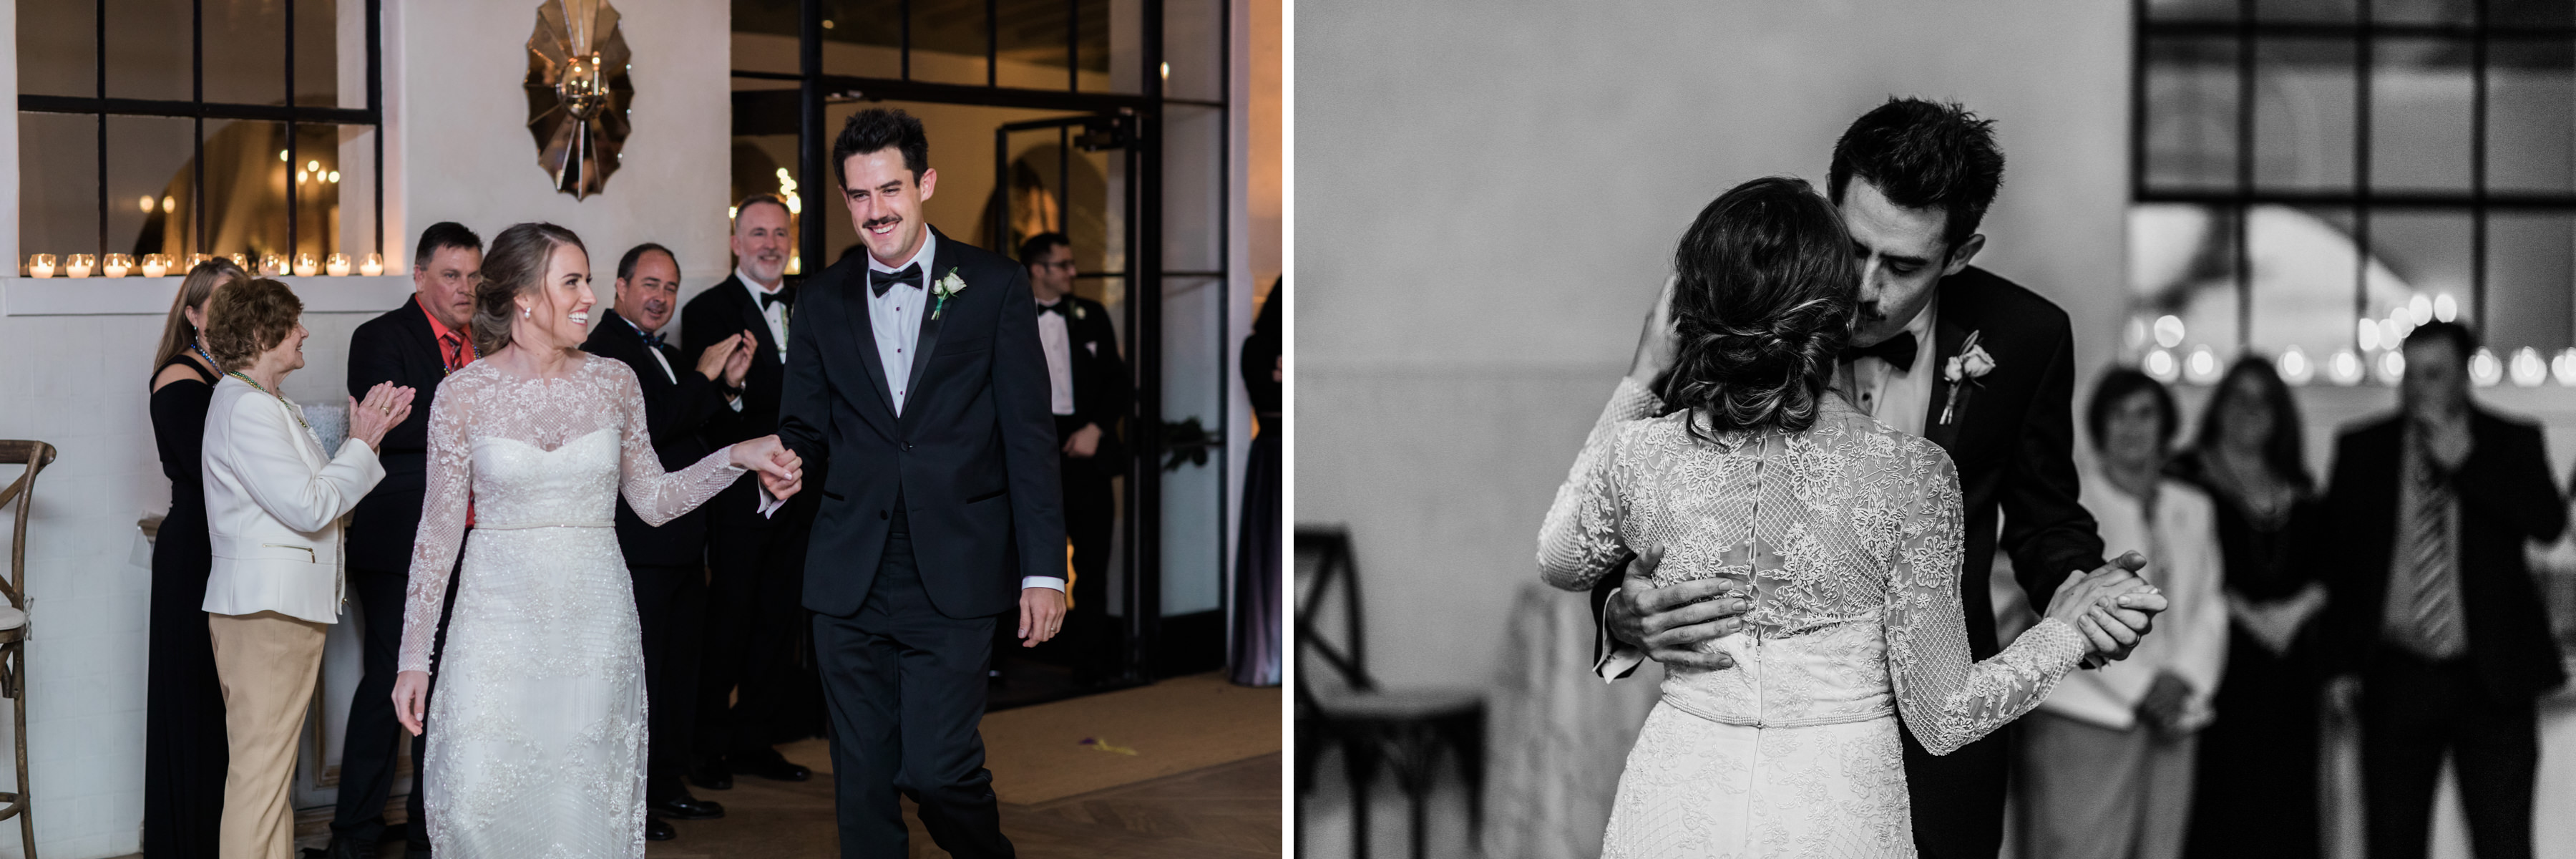 MULLET_WEDDING_NEW_ORLEANS_LOUISIANA_WEDDING_PHOTOGRAPHY_147